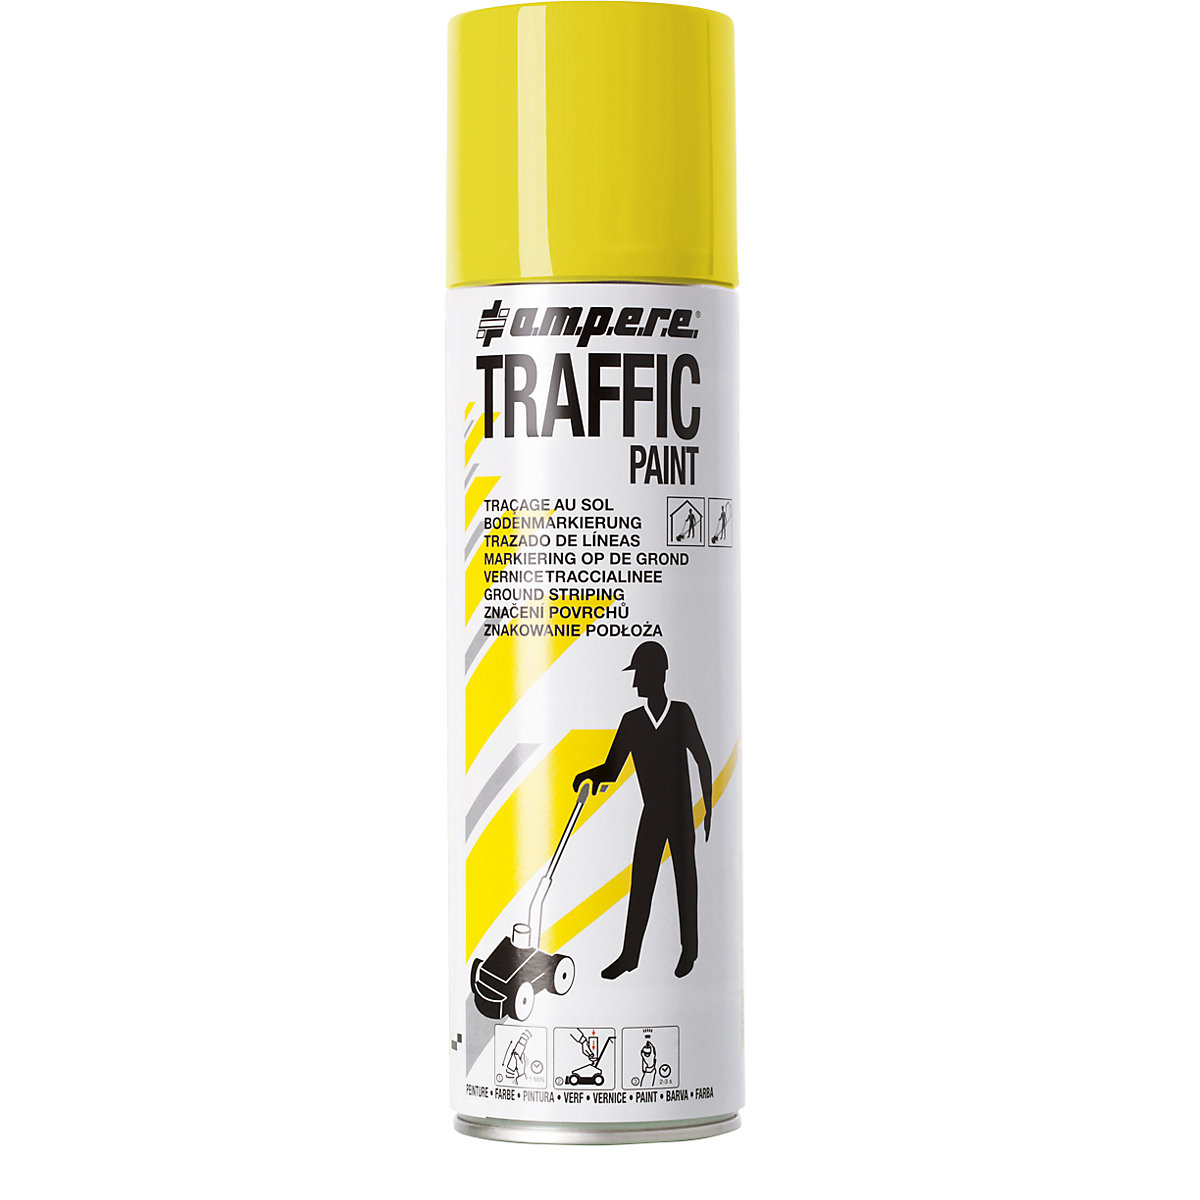 Peinture de marquage – Ampere, contenu 500 ml, lot de 12 aérosols, jaune